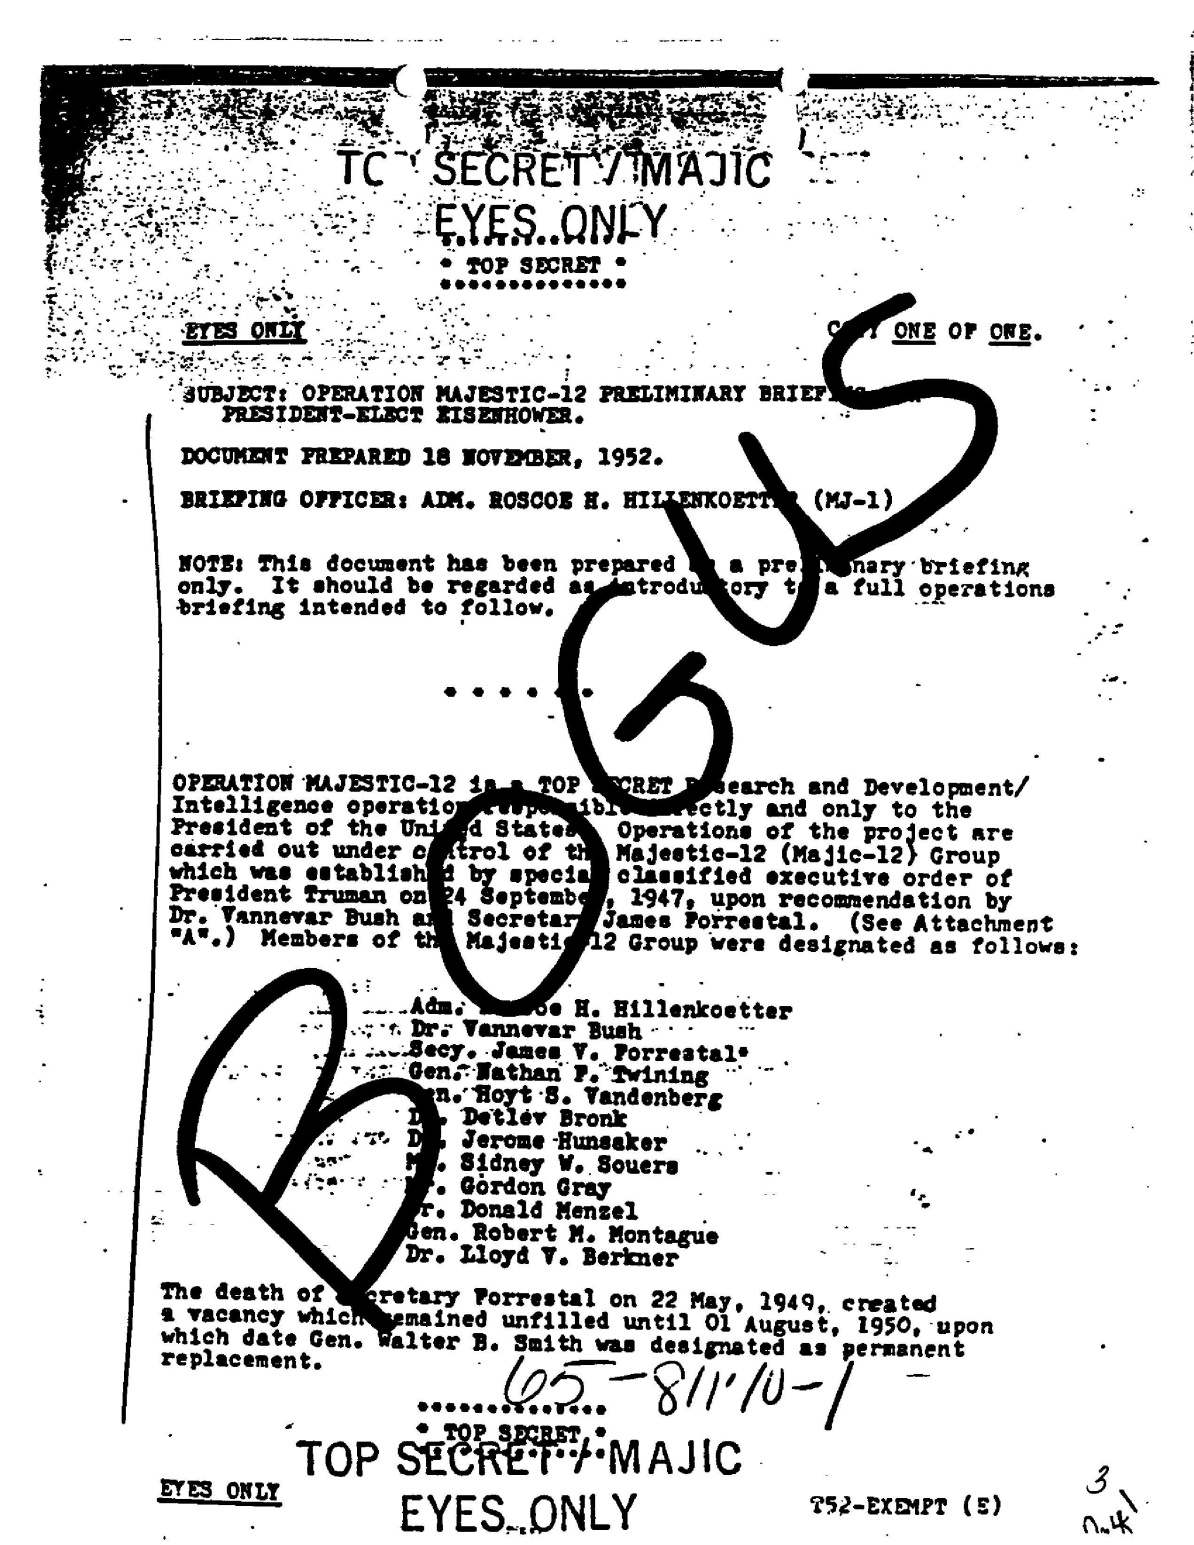 Majestic 12 1988년에 두 개의 FBI 사무소는 고도로 기밀로 분류된 정부 문서라고 주장하는 "Operation Majestic-12..."라는 제목의 유사한 버전의 메모를 받았습니다. 이 메모는 외계 항공기의 회수를 이용하고 공개 조사에서 이 작업을 은폐하기 위해 만들어진 비밀 위원회에서 새로 선출된 아이젠하워 대통령을 위한 브리핑으로 보였습니다. 공군 조사 결과 문서가 가짜로 판명됐다.